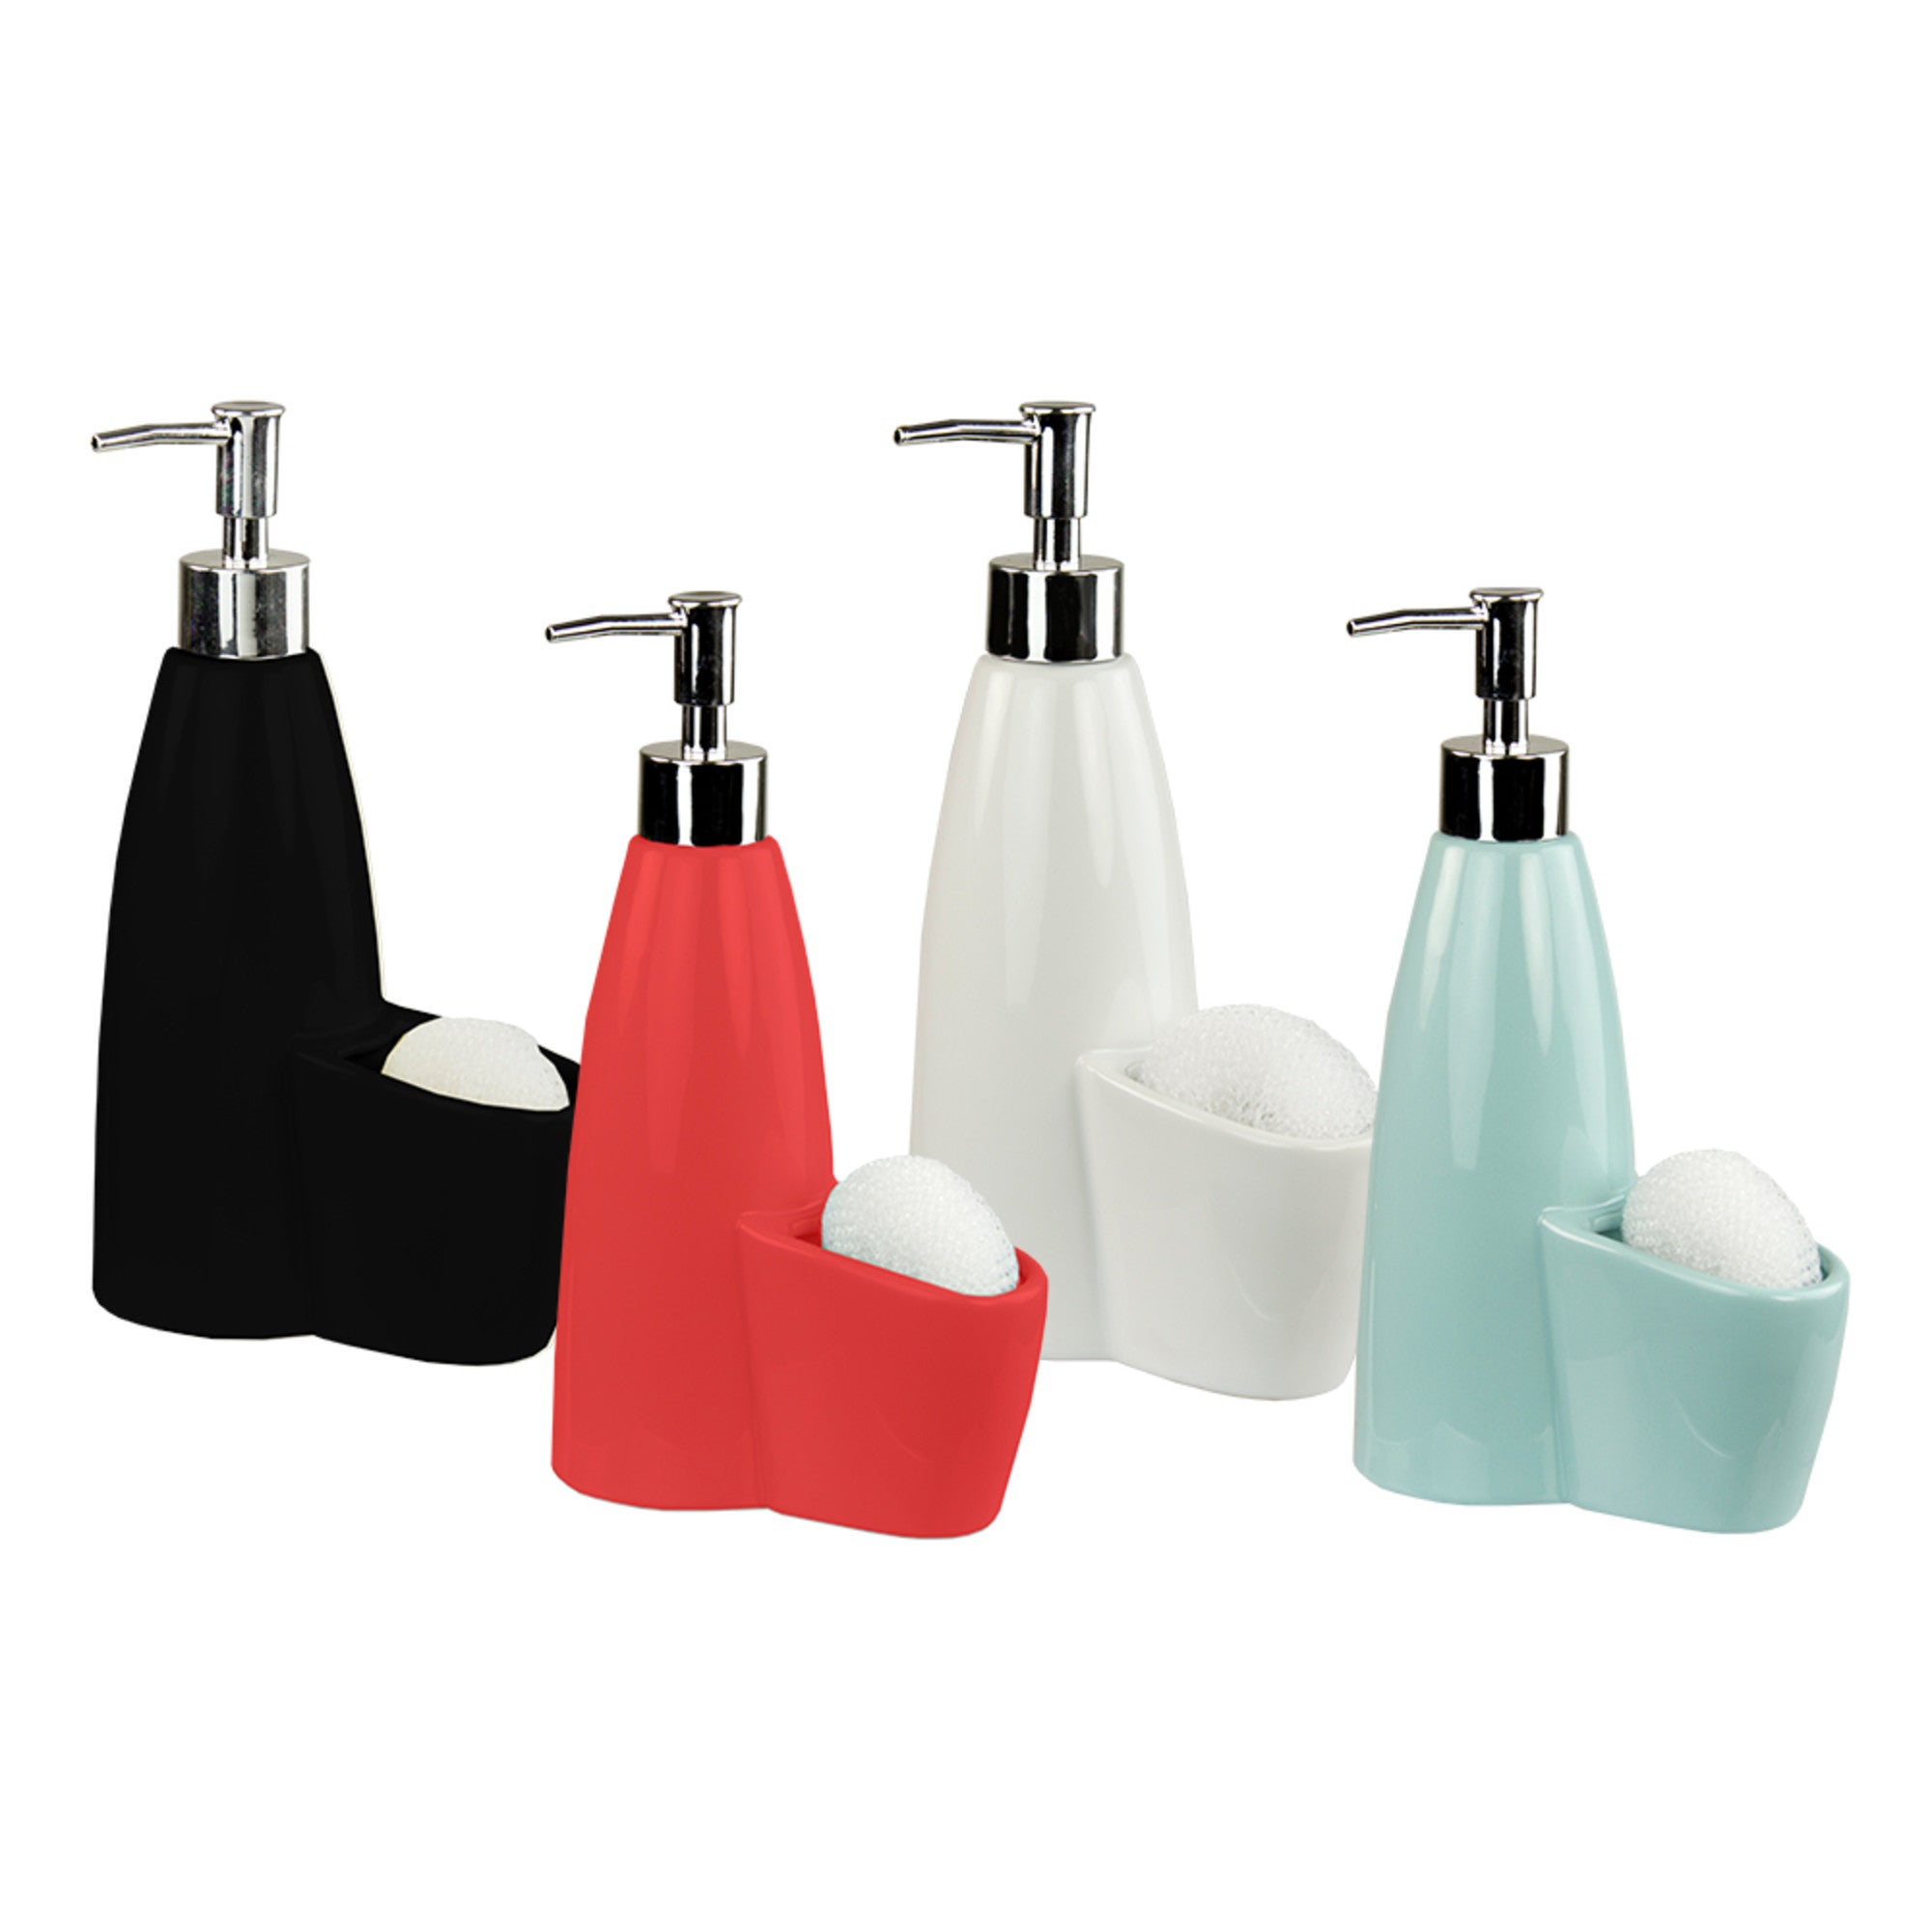 Home Basics Tall Ceramic Soap Dispenser with Sponge - Assorted Colors